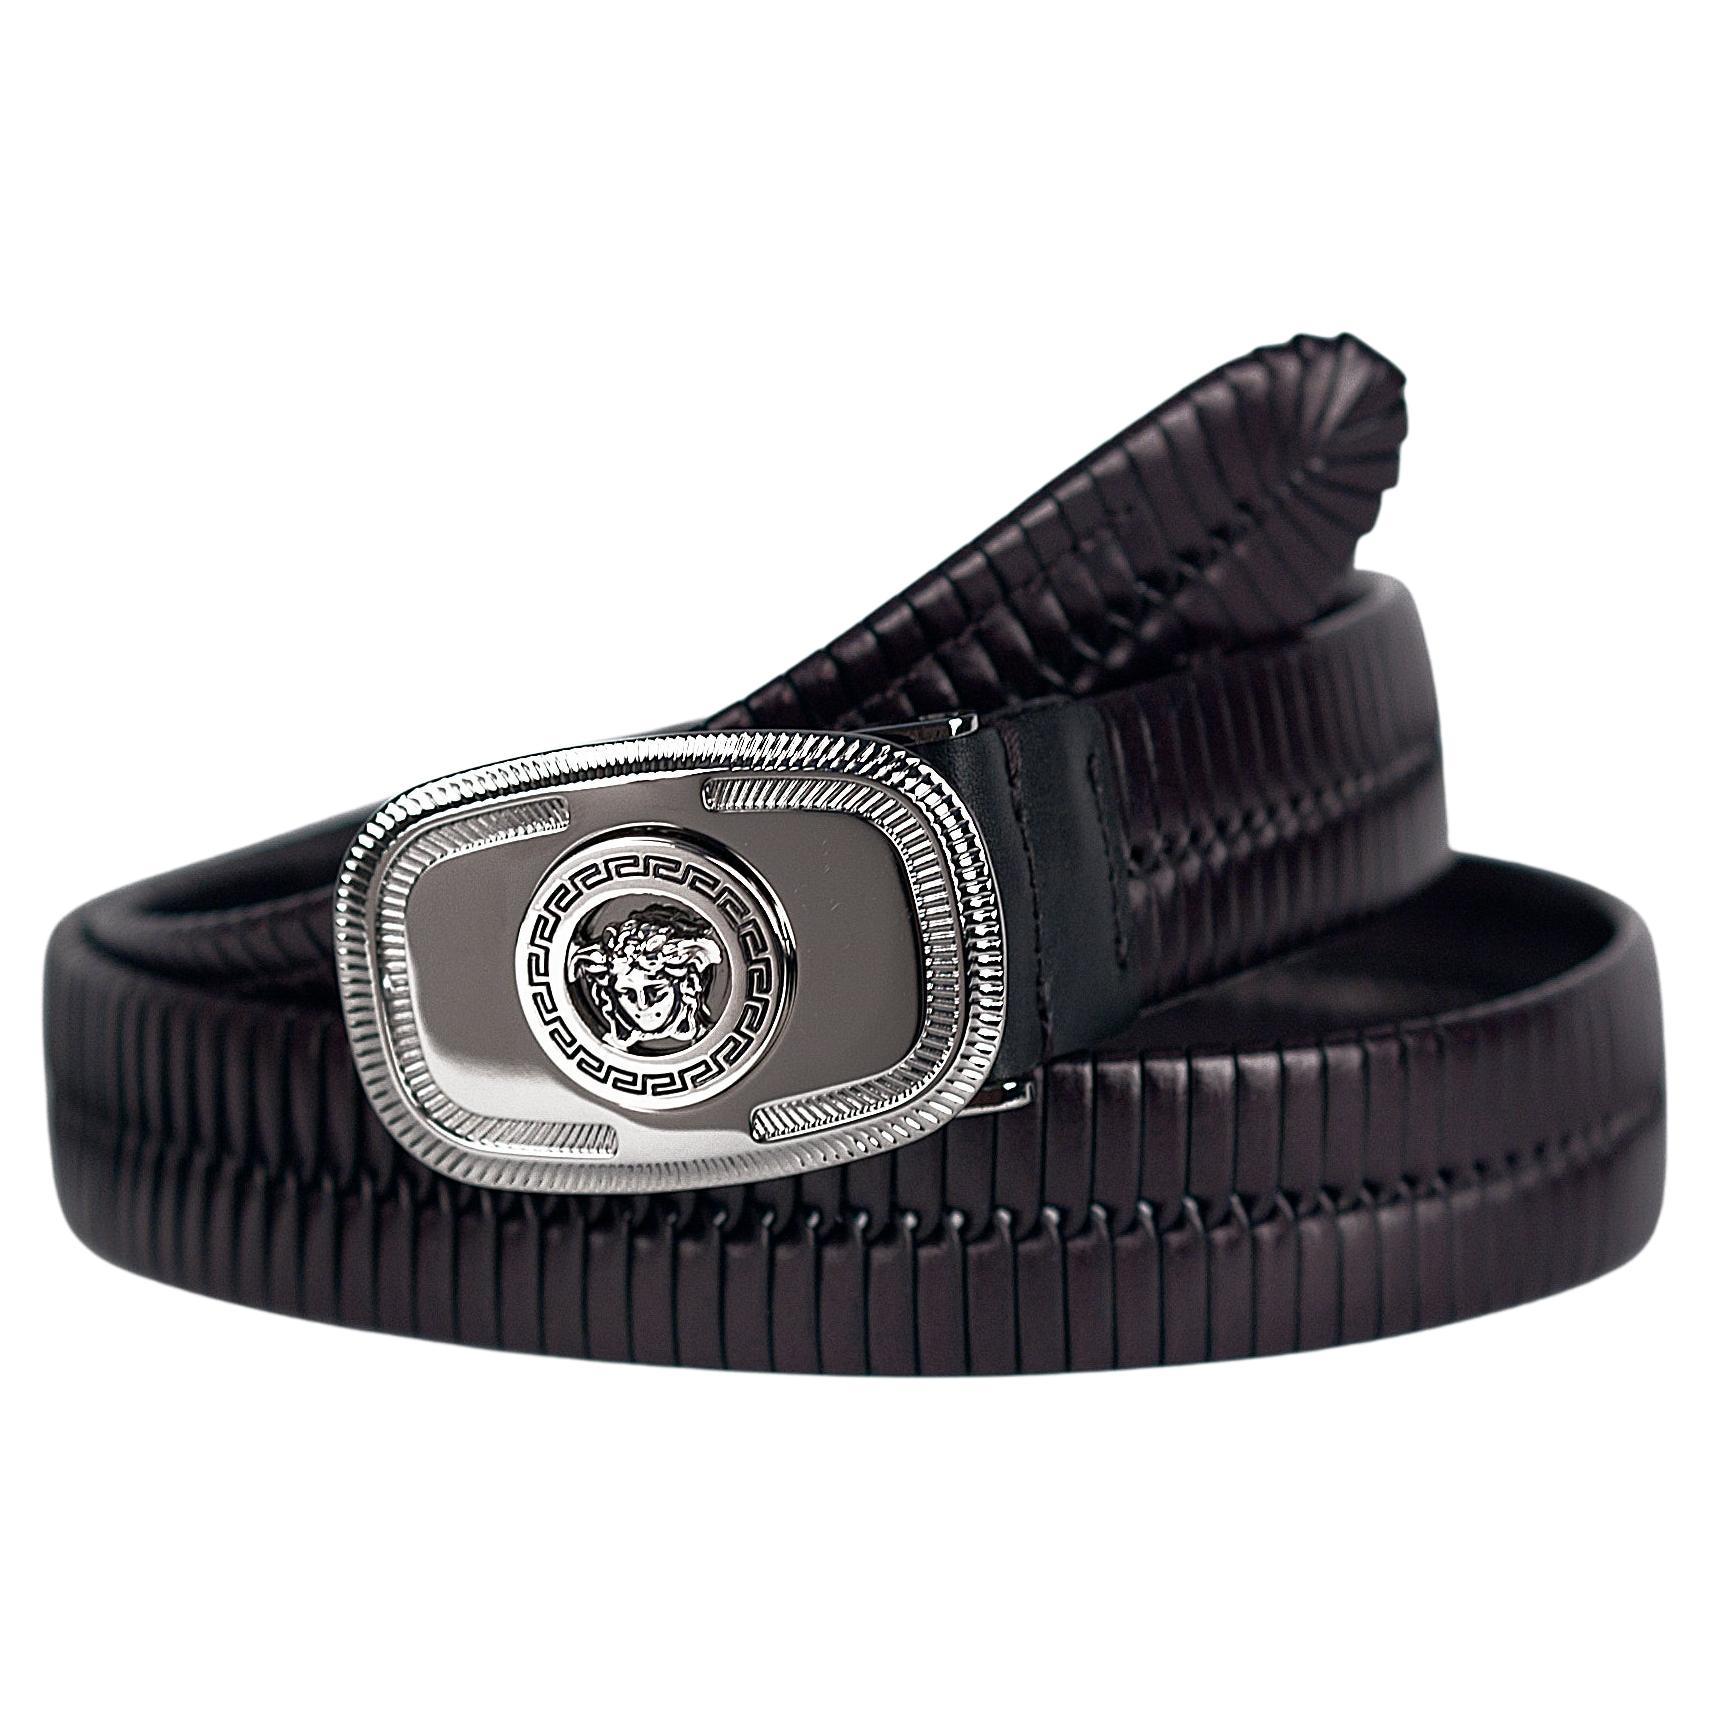 Versace Collection Men's Black Genuine Leather Belt Sz 30/80 32/85 34/90 